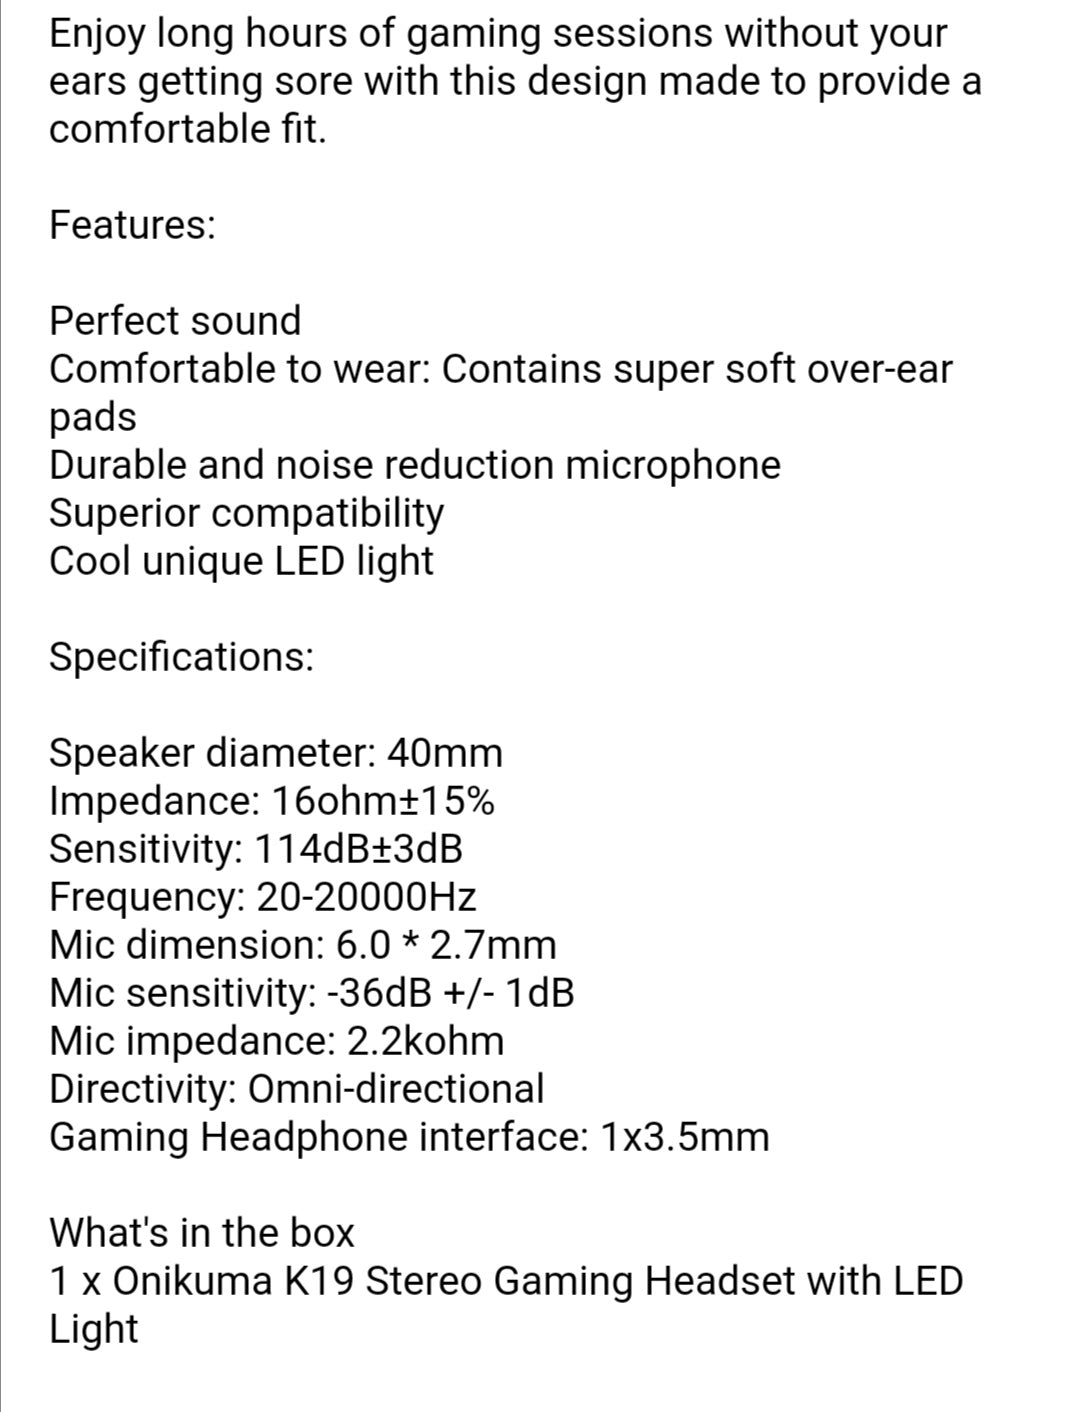 Onikuma K19 Gaming Headphones